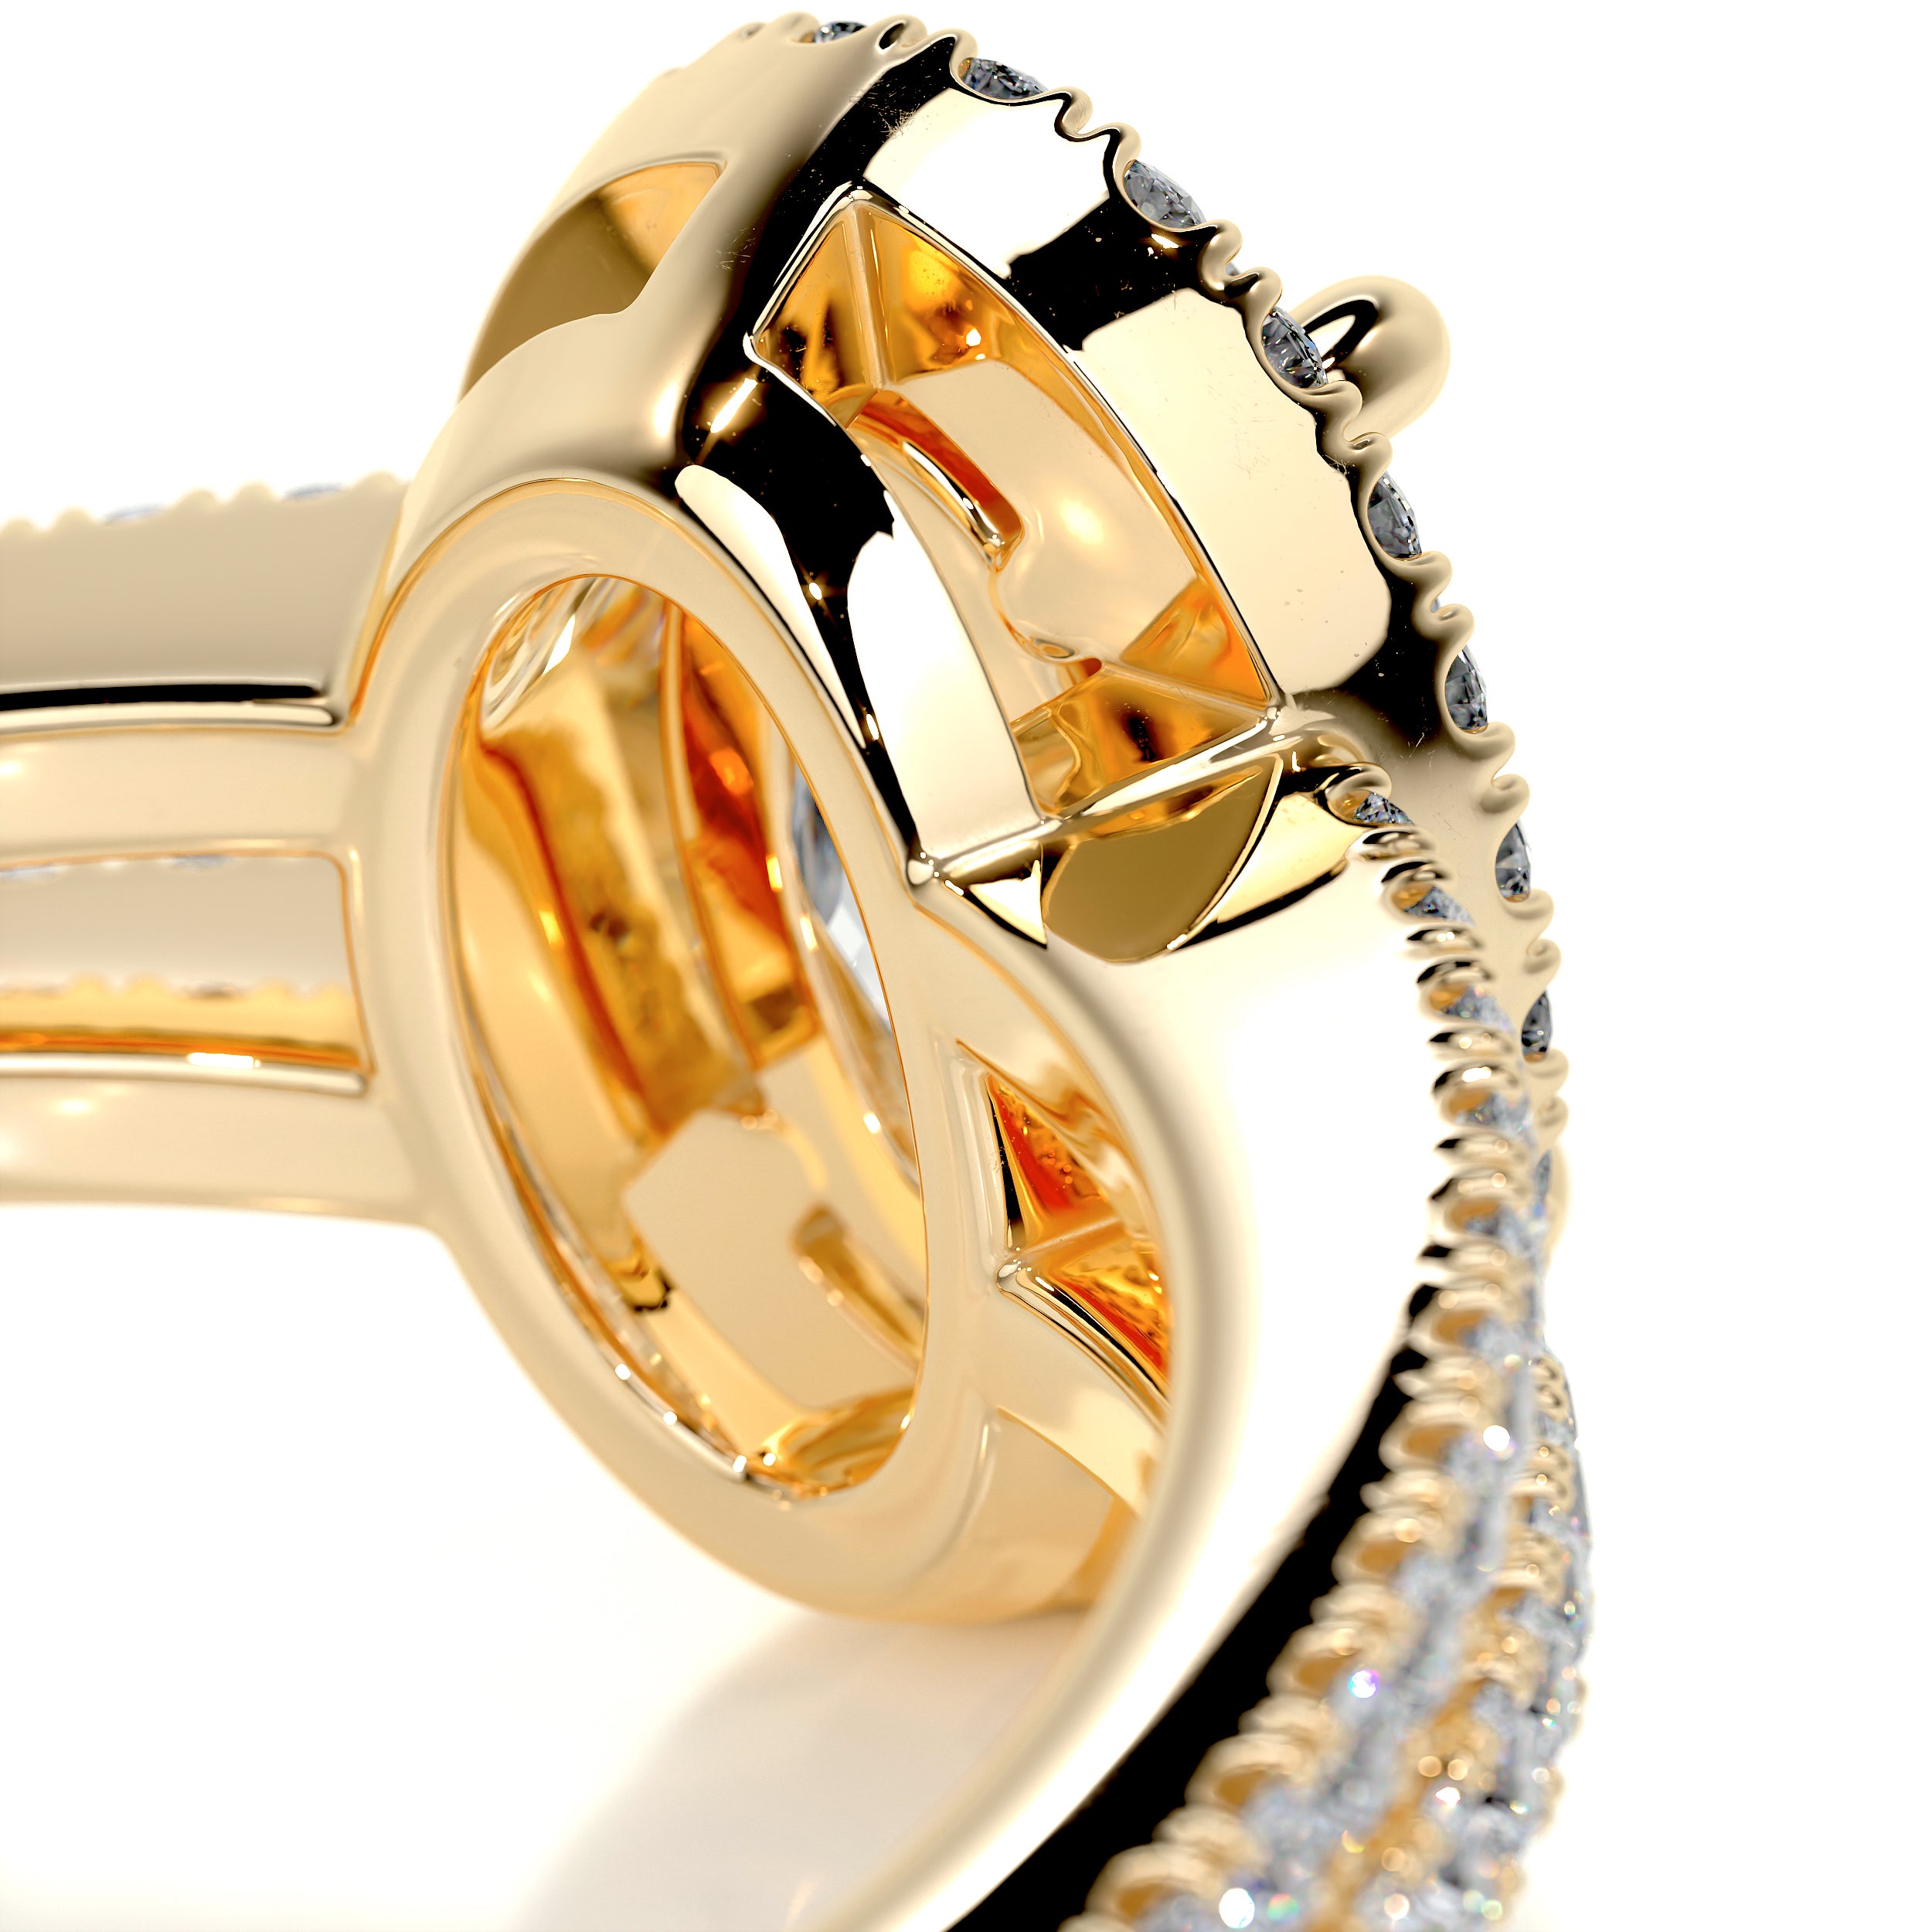 Brielle Diamond Engagement Ring   (1.2 Carat) -18K Yellow Gold